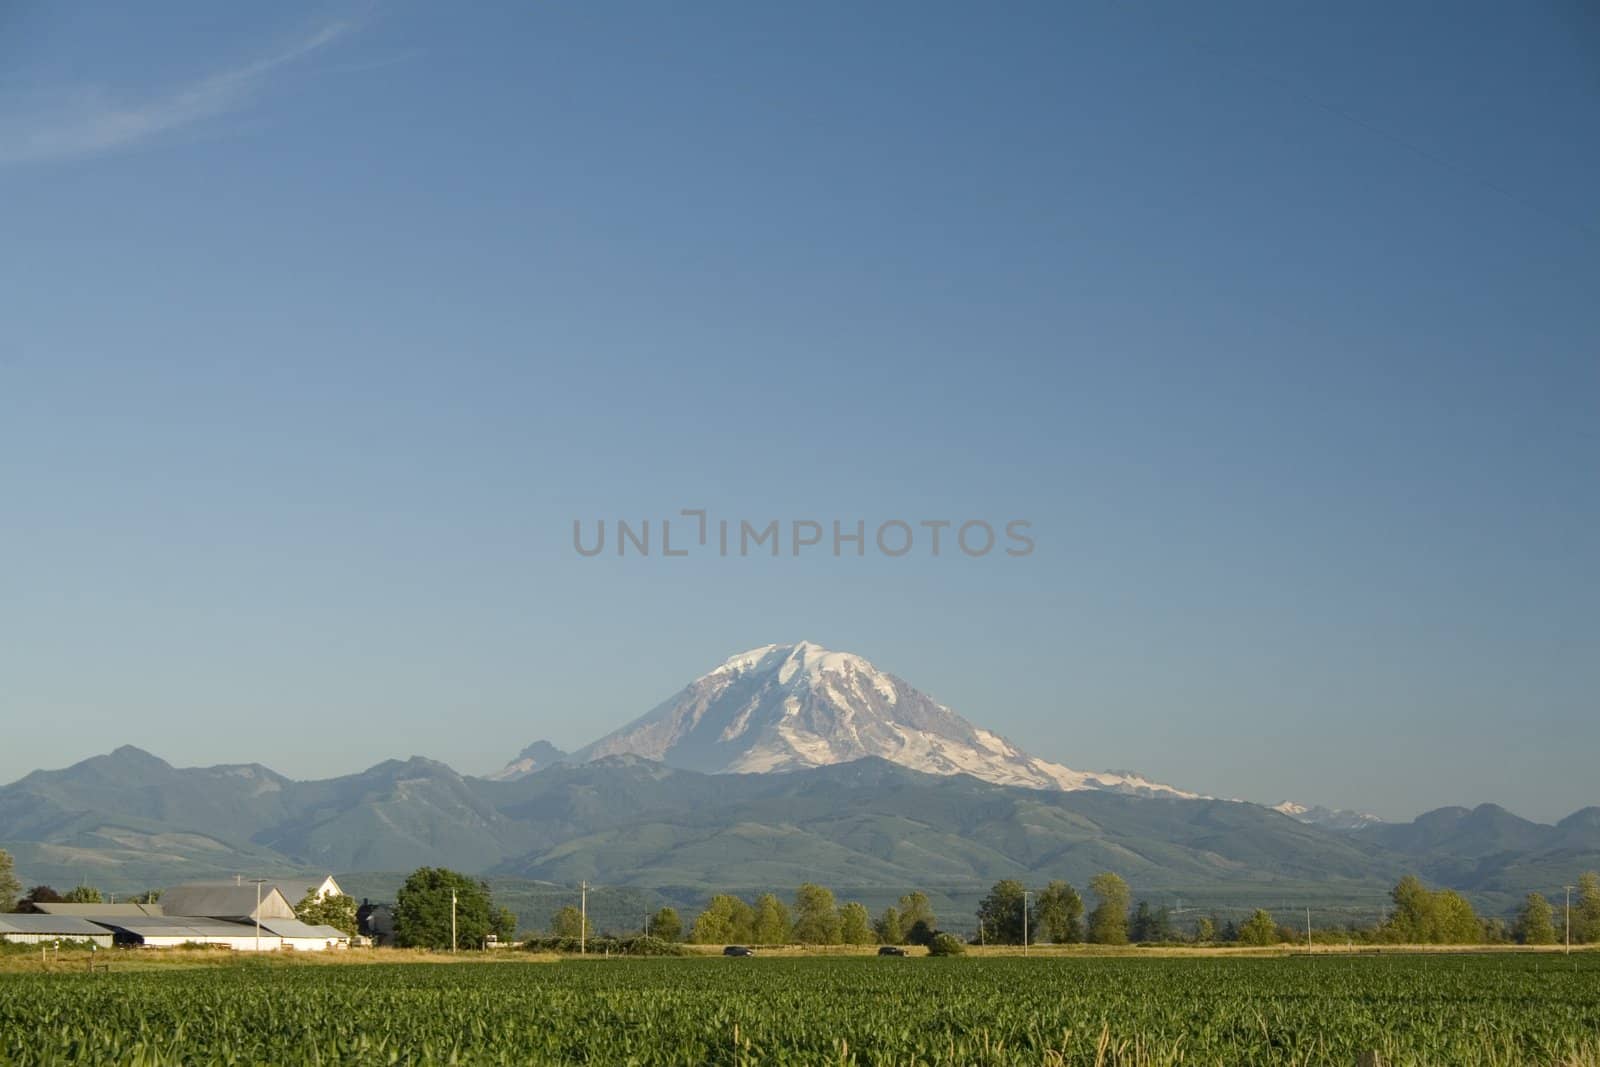 Mount Rainier towers over a rural cornfield near Auburn, Washington.